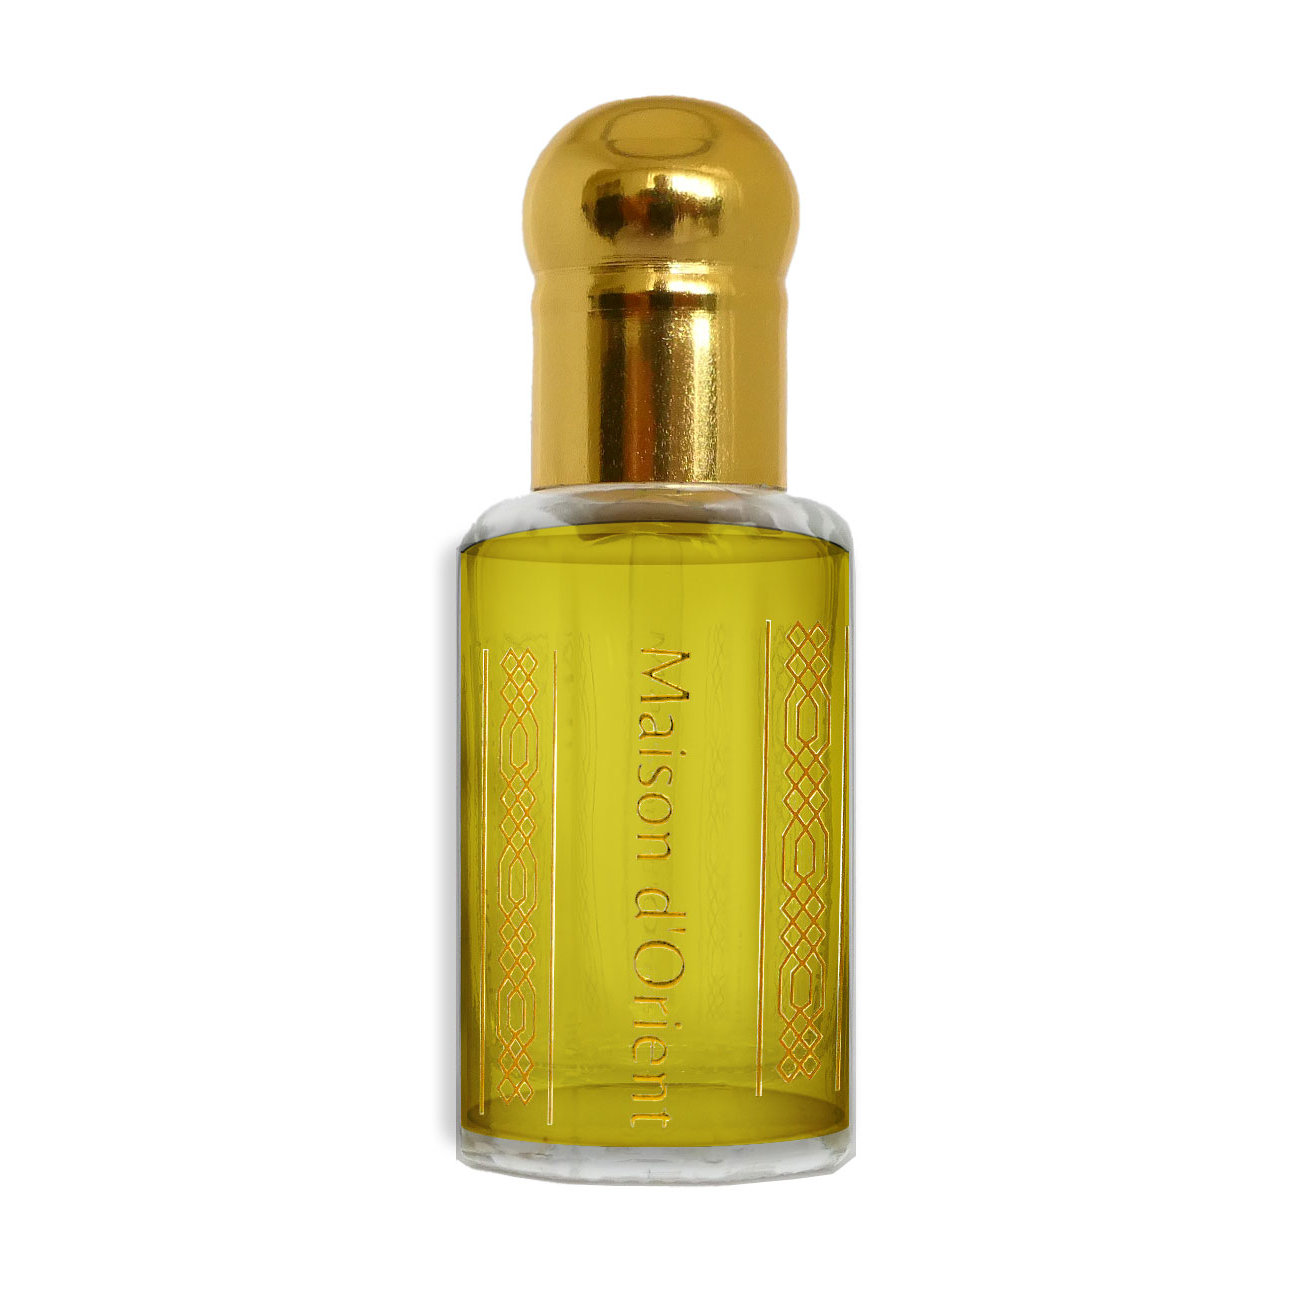 MADEMOISELLE women's designer perfume EDP spray by MCH Beauty